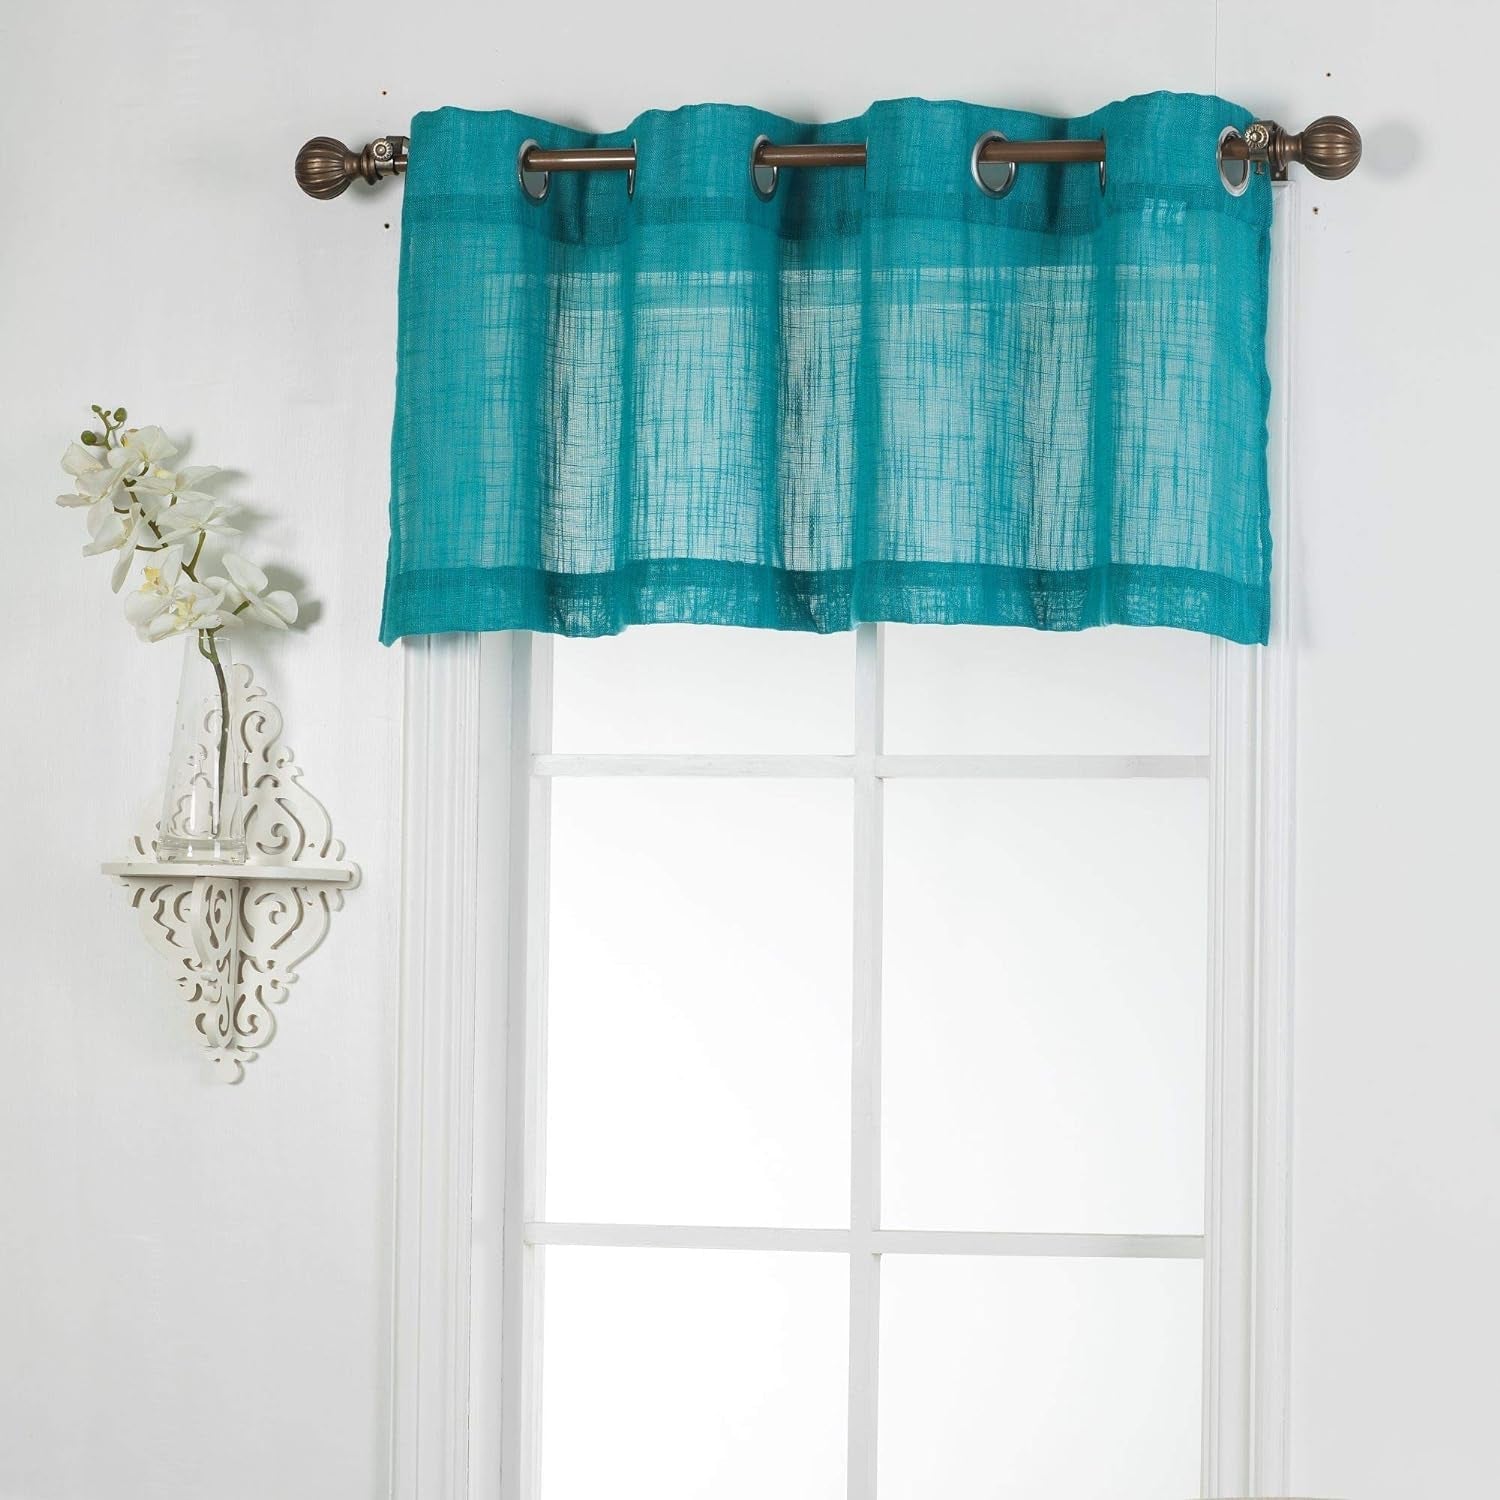 1 Piece Linen Look Semi Sheer Grommet Top Window Treatment Kitchen Curtain Valance (52" W X 18" L, White)